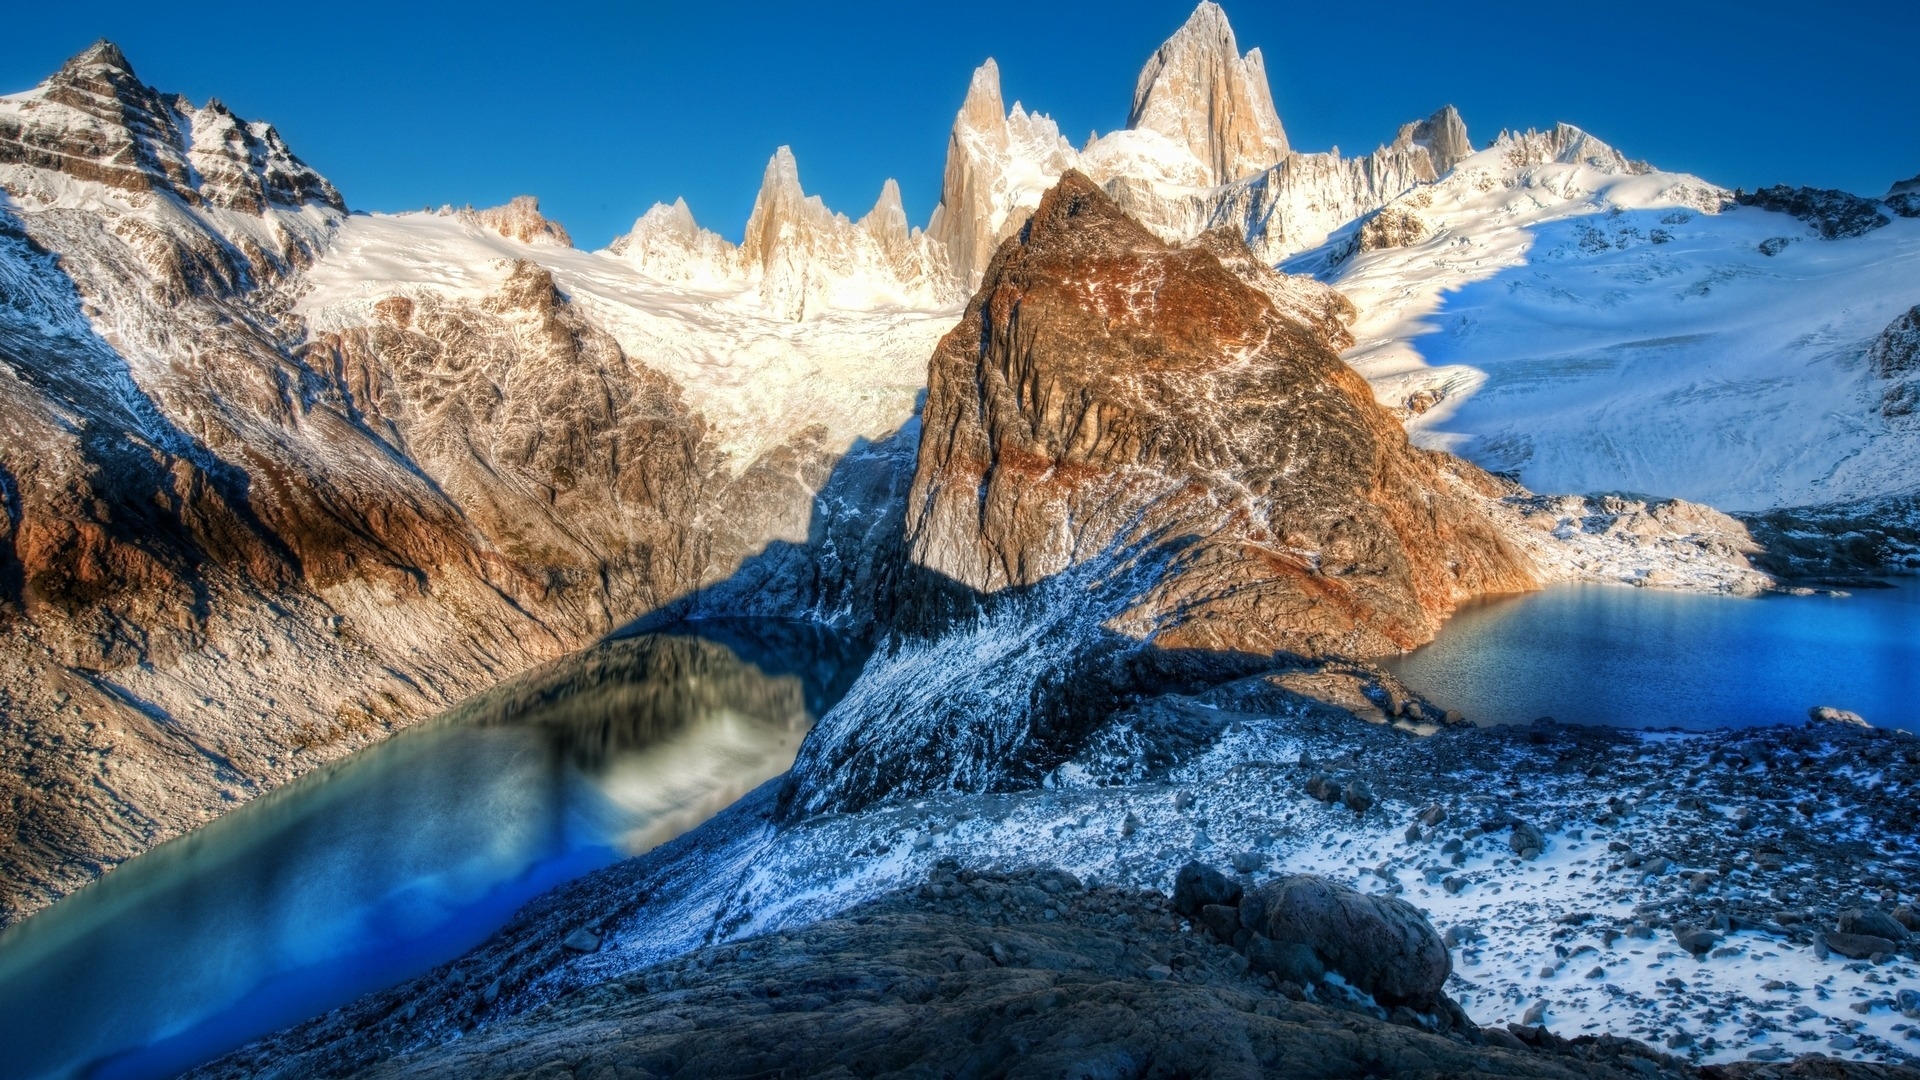 Mountain Rocks Landscape for 1920 x 1080 HDTV 1080p resolution